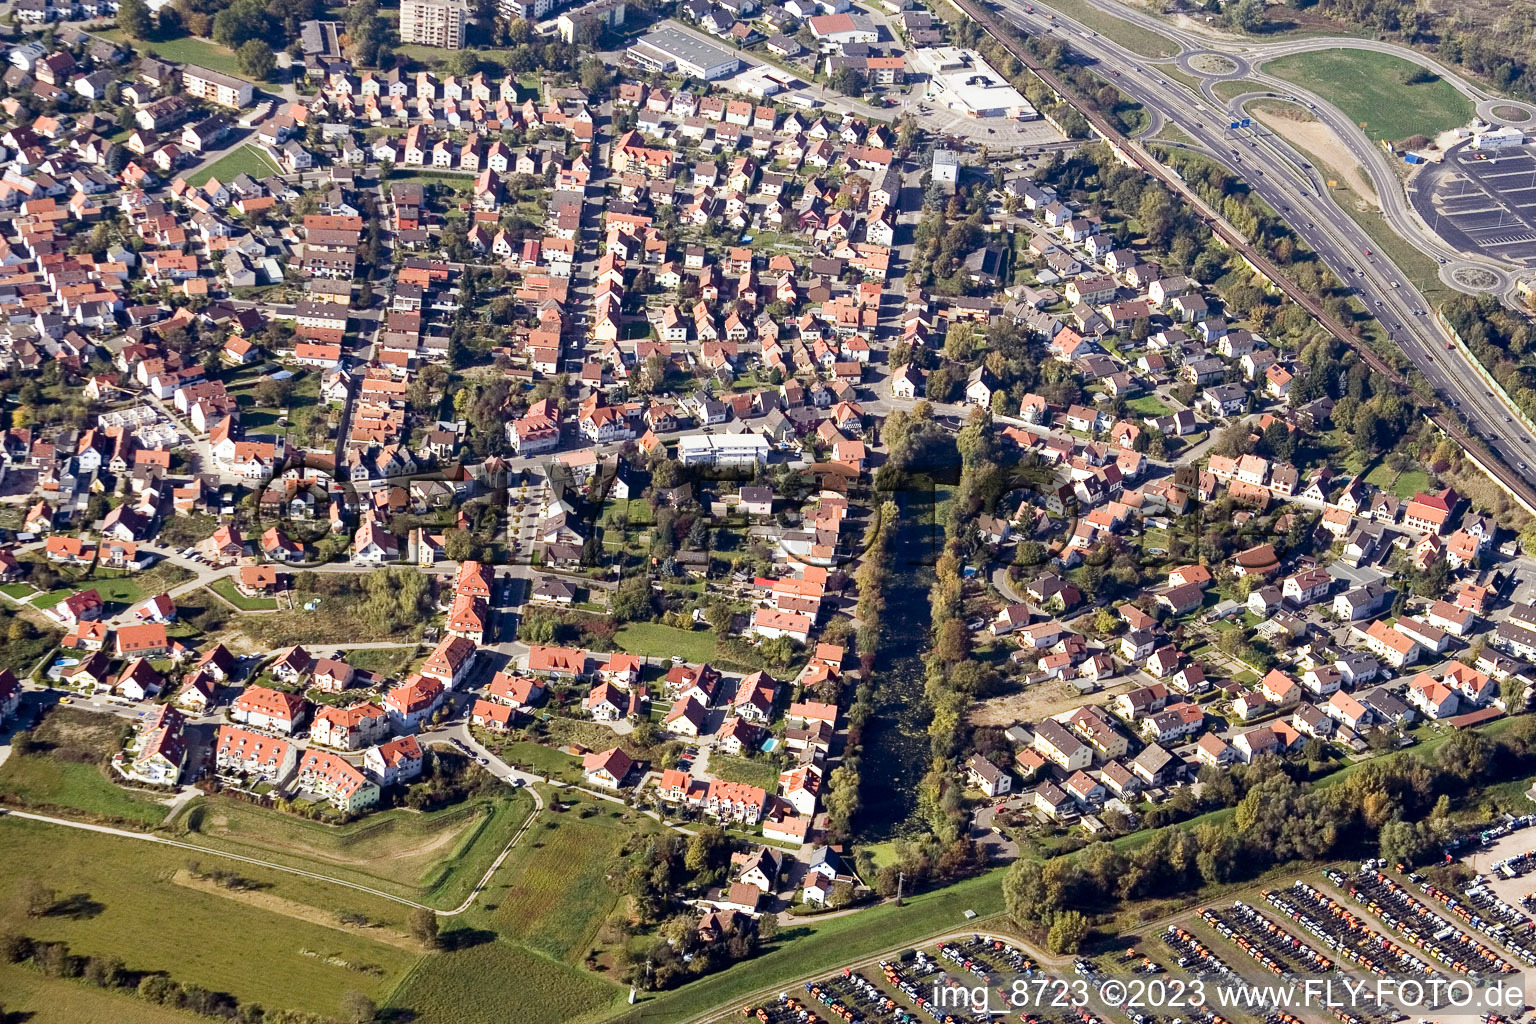 Drone image of District Maximiliansau in Wörth am Rhein in the state Rhineland-Palatinate, Germany